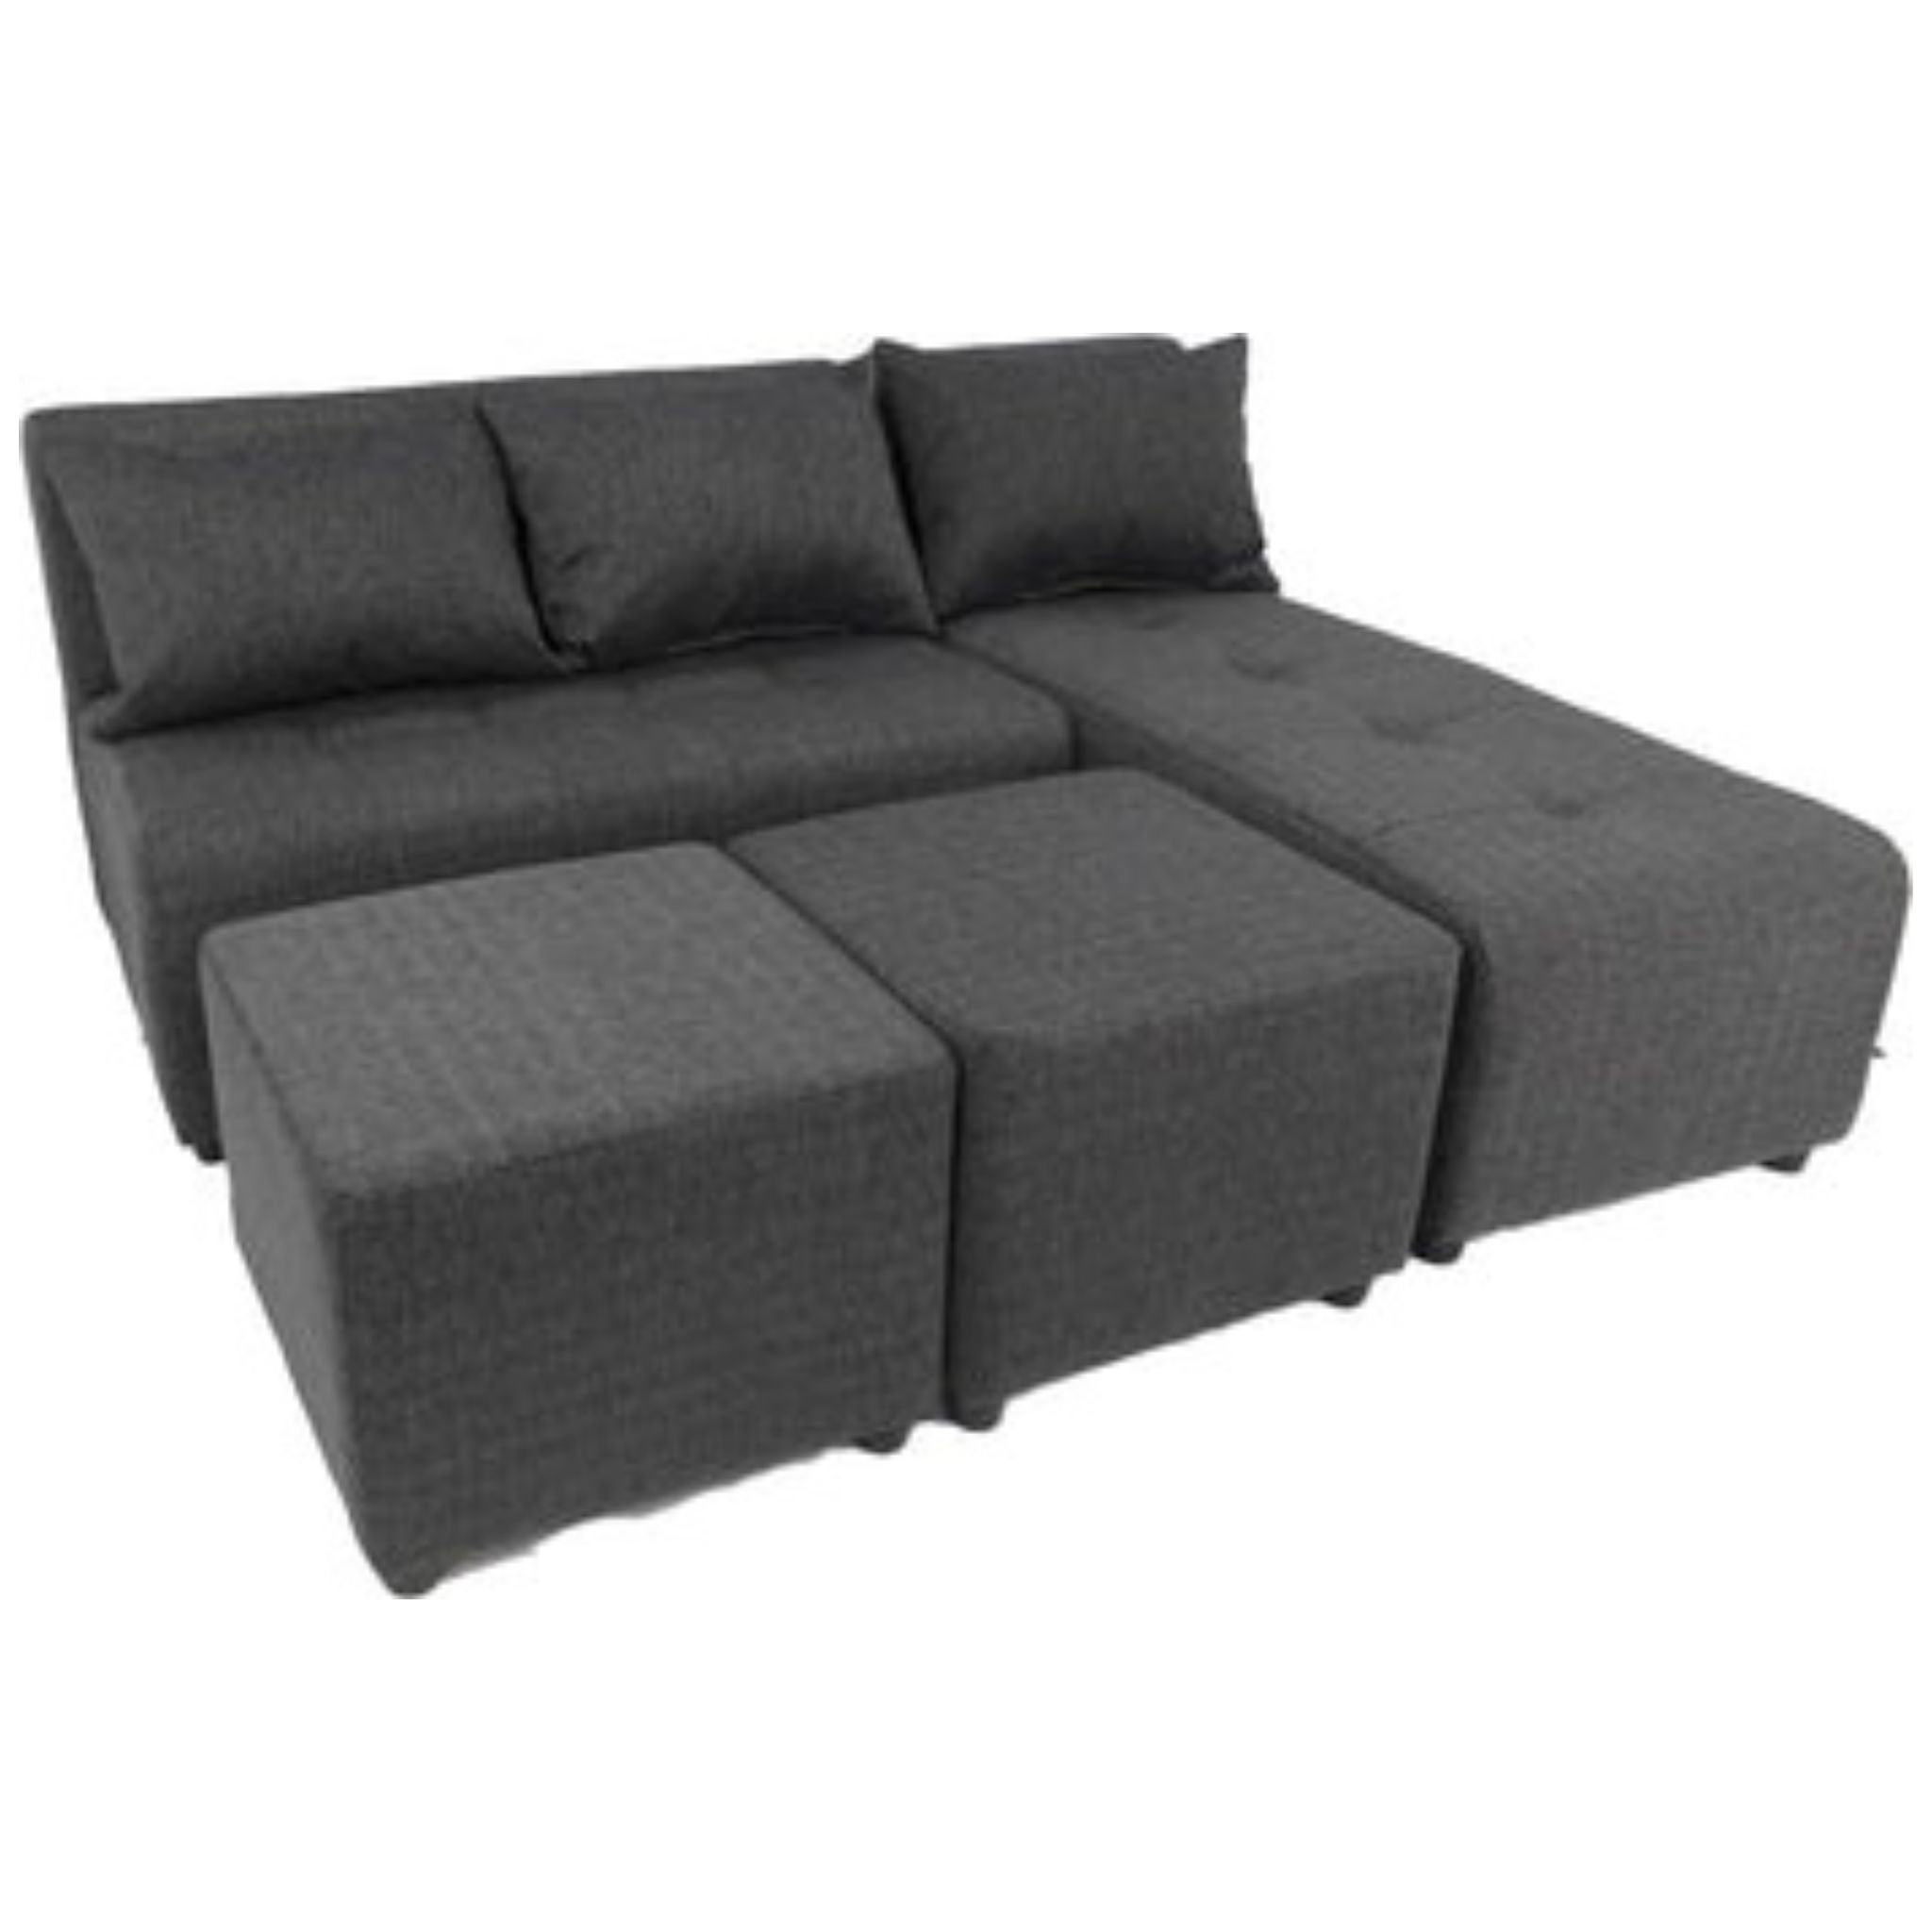 RHEA L-Shape Fabric Sofa AF Home